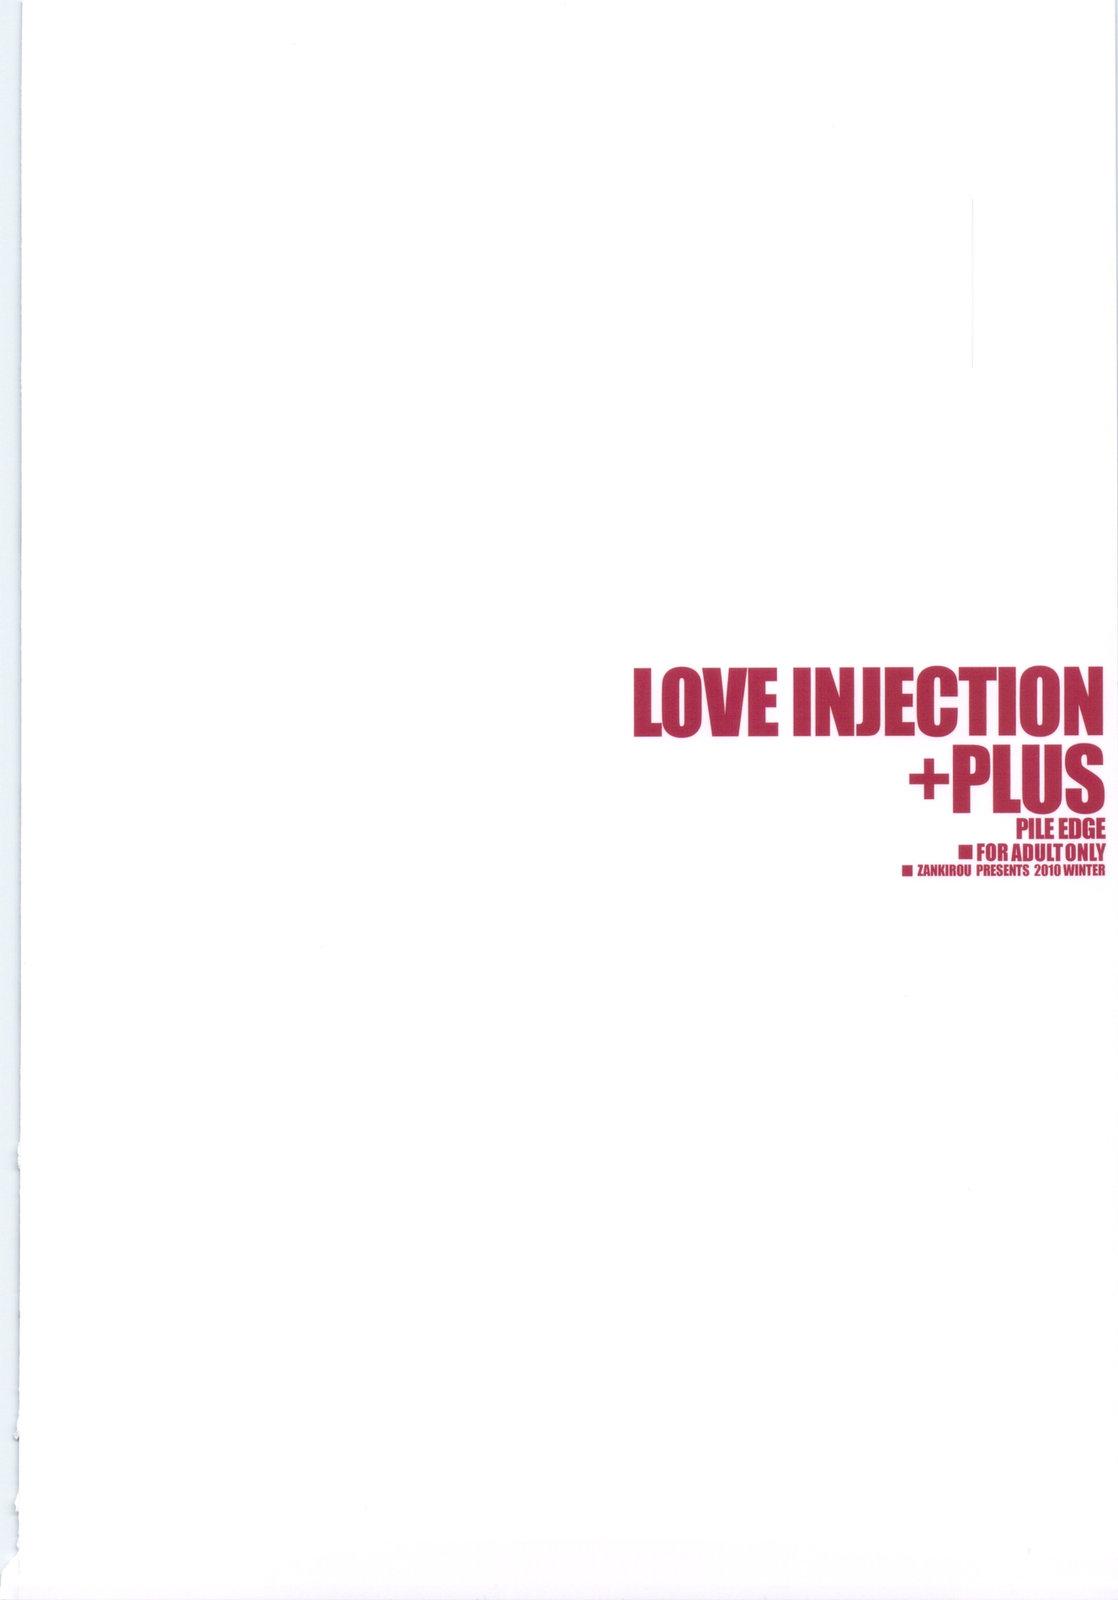 PILE EDGE LOVE INJECTION +PLUS 23